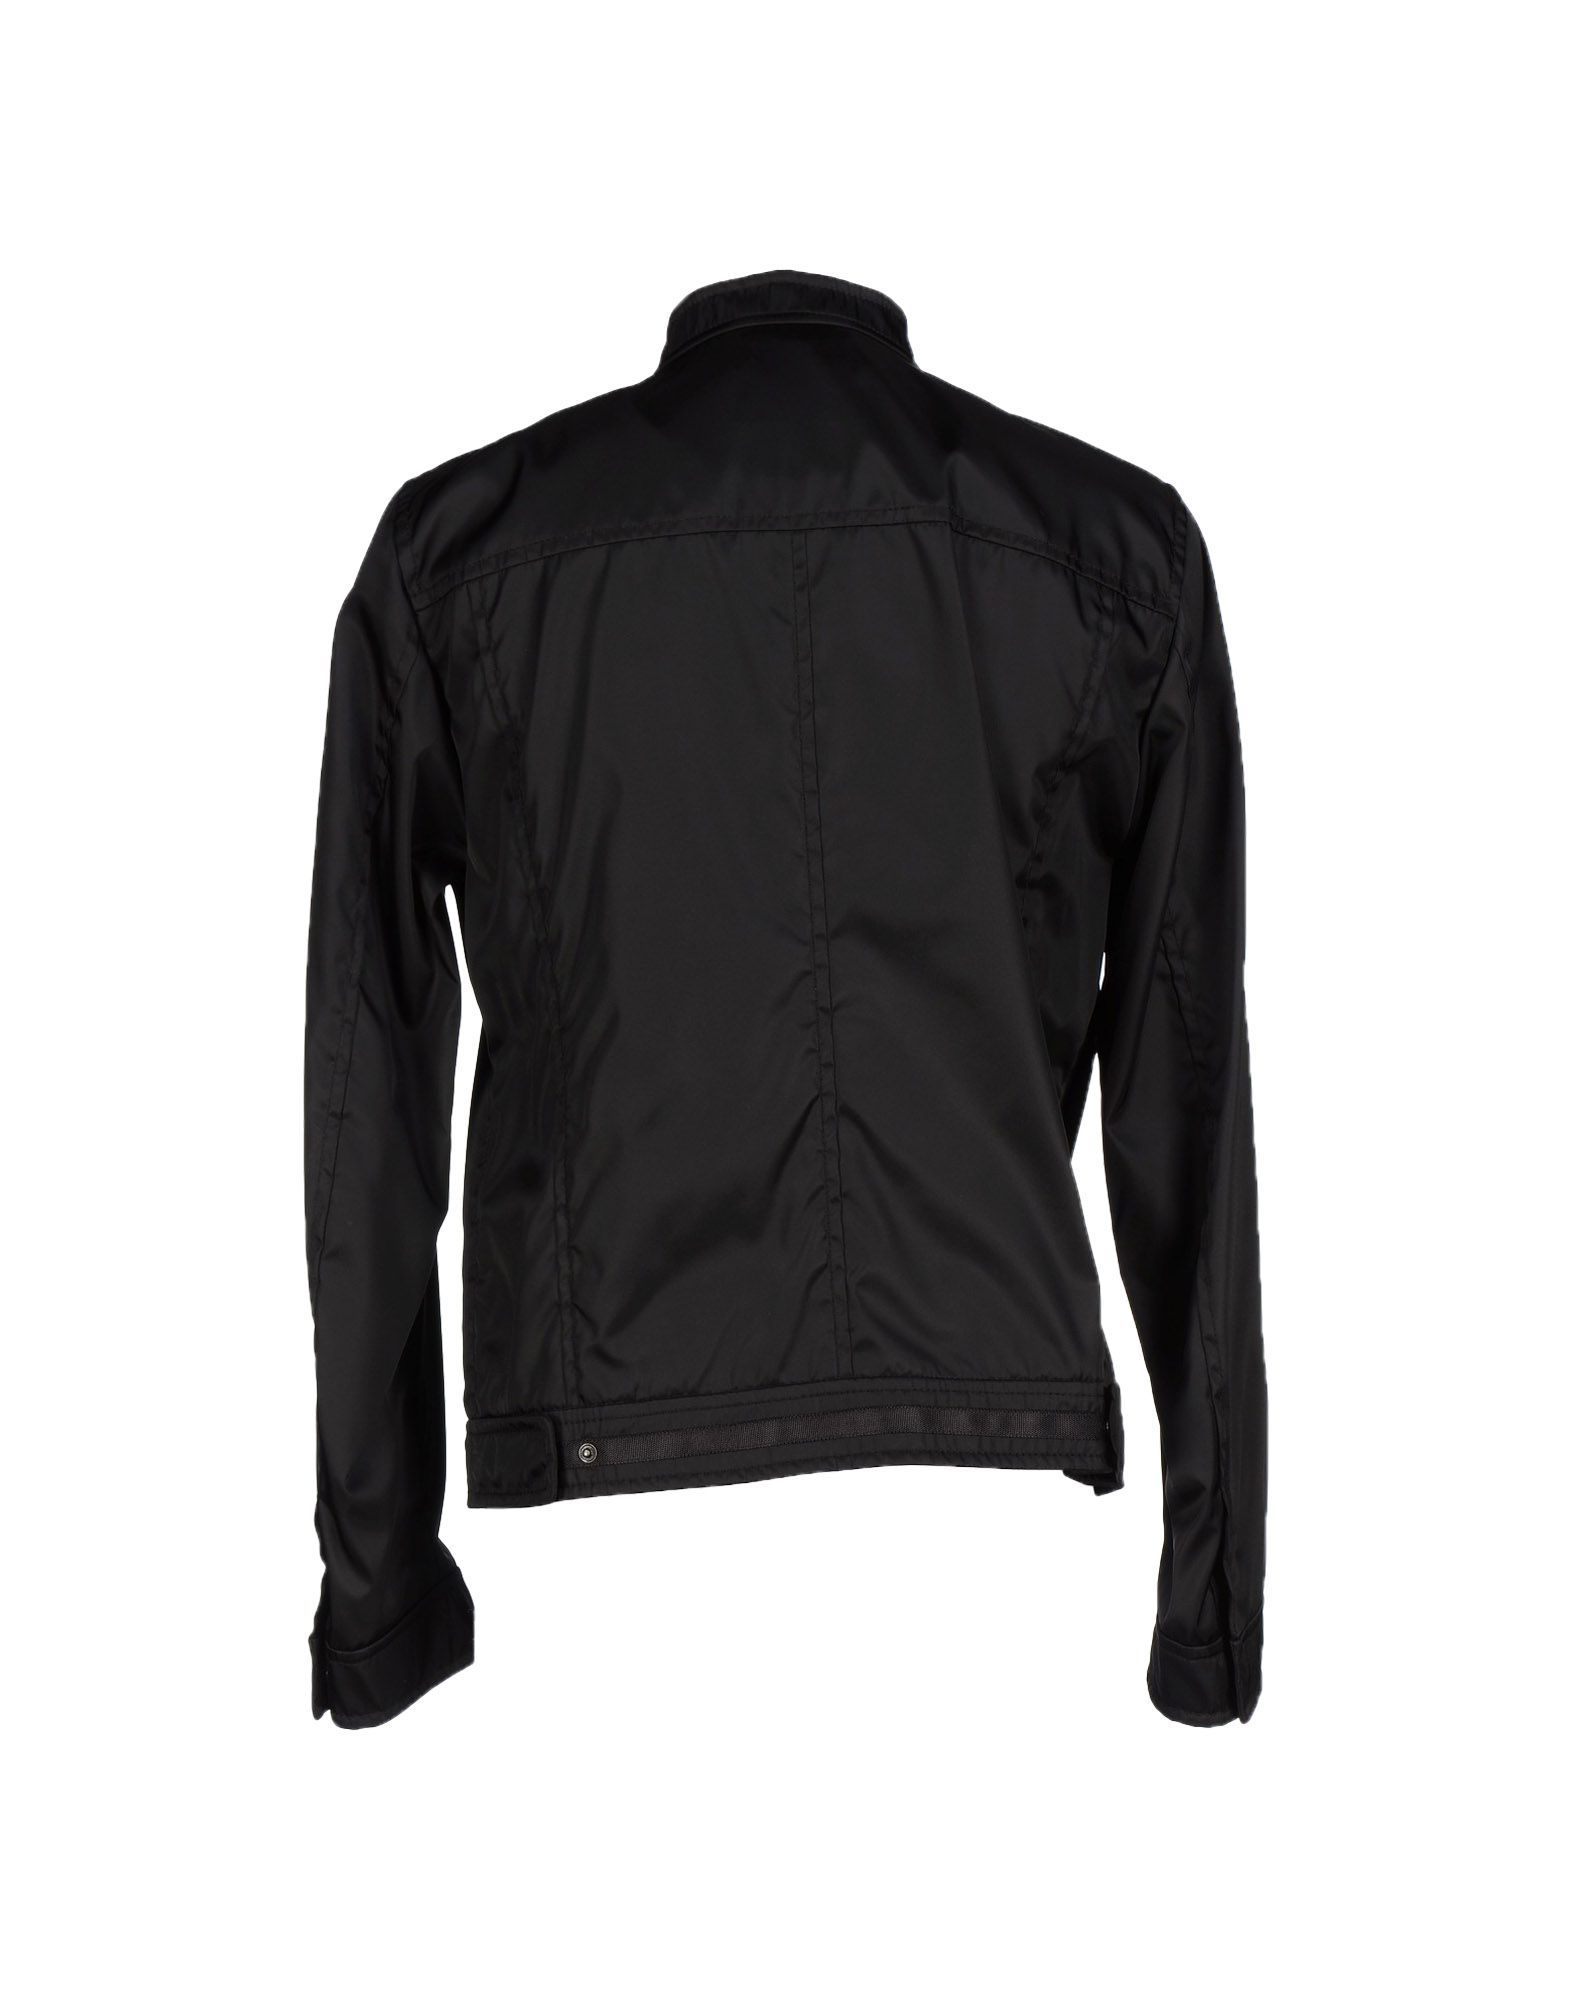 Lyst - Prada Jacket in Black for Men